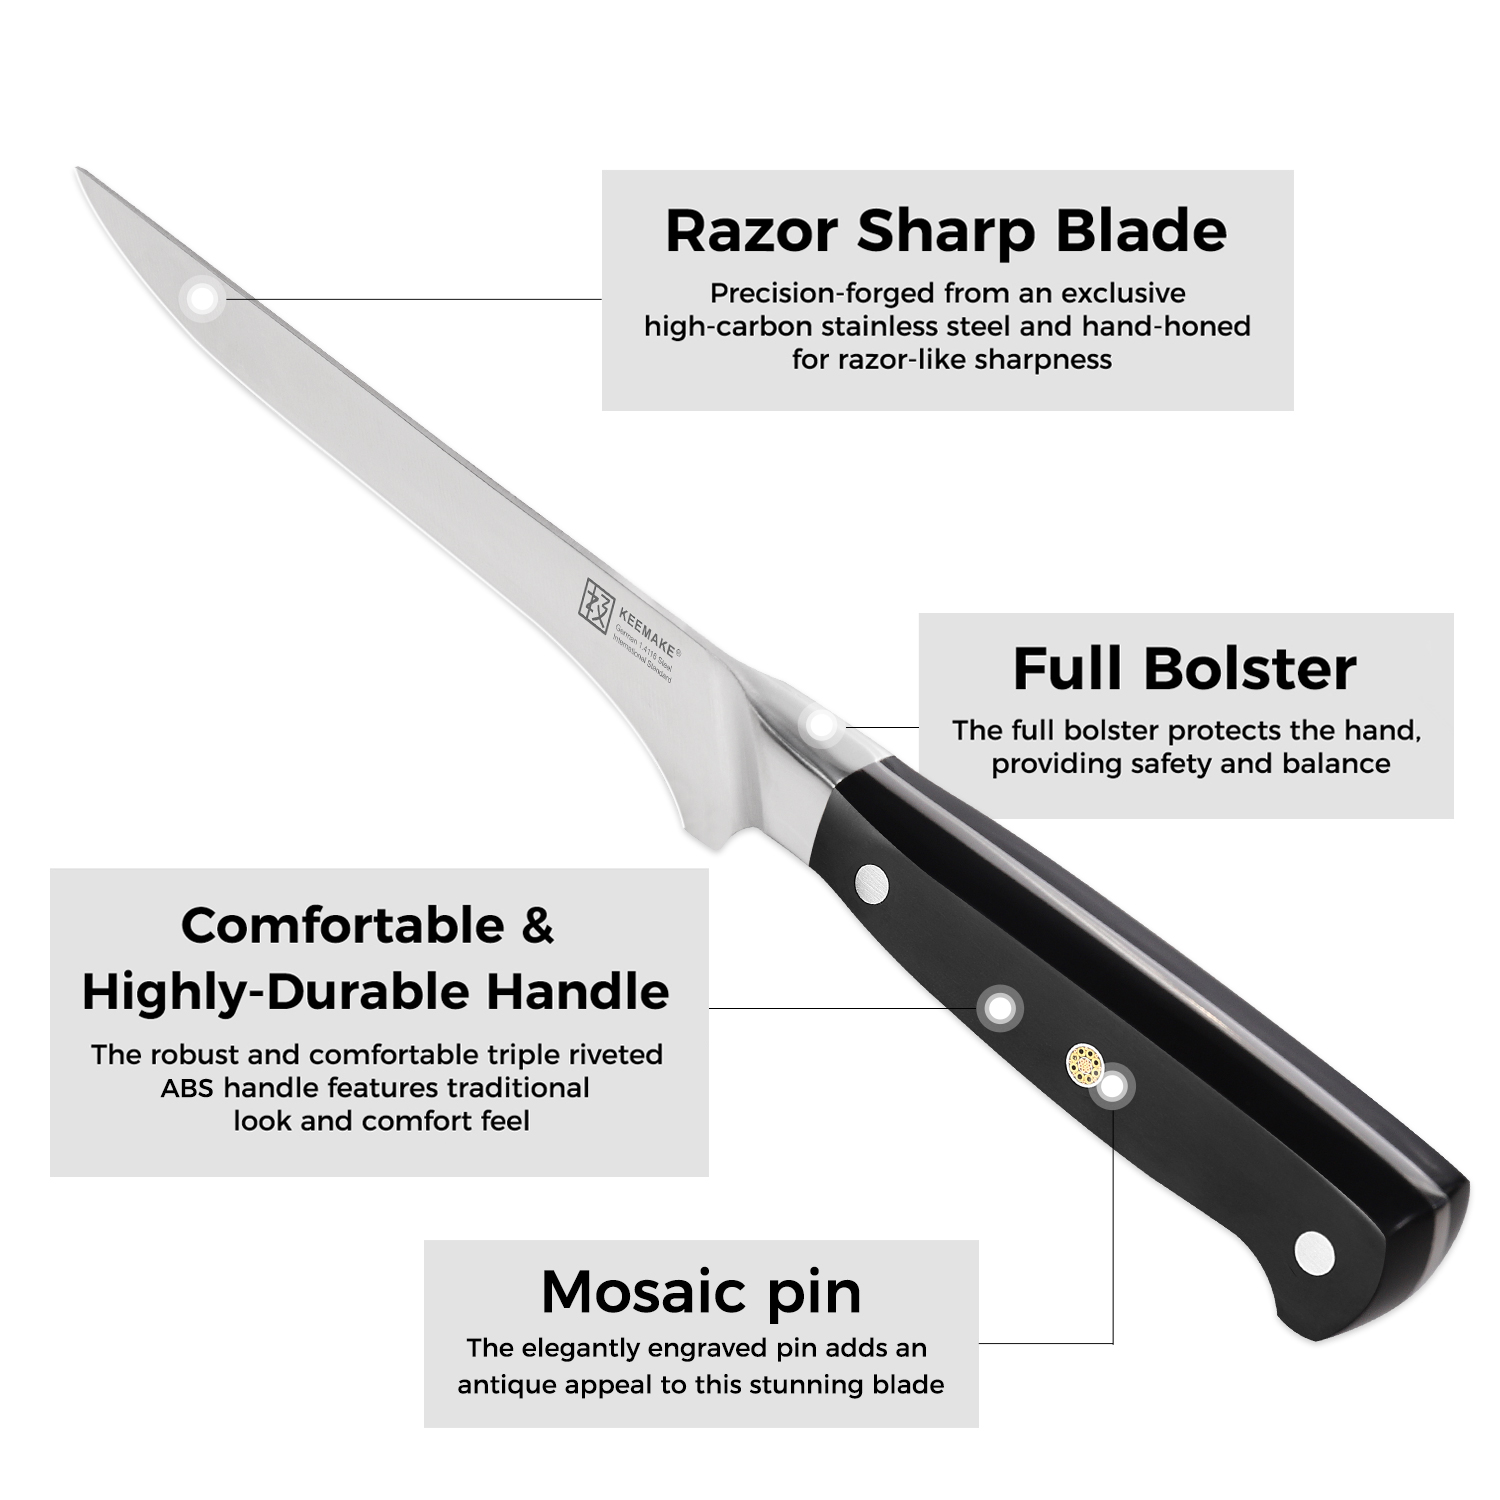 KEEMAKE Boning Knife 5.5 inch, Fish Filleting Knife